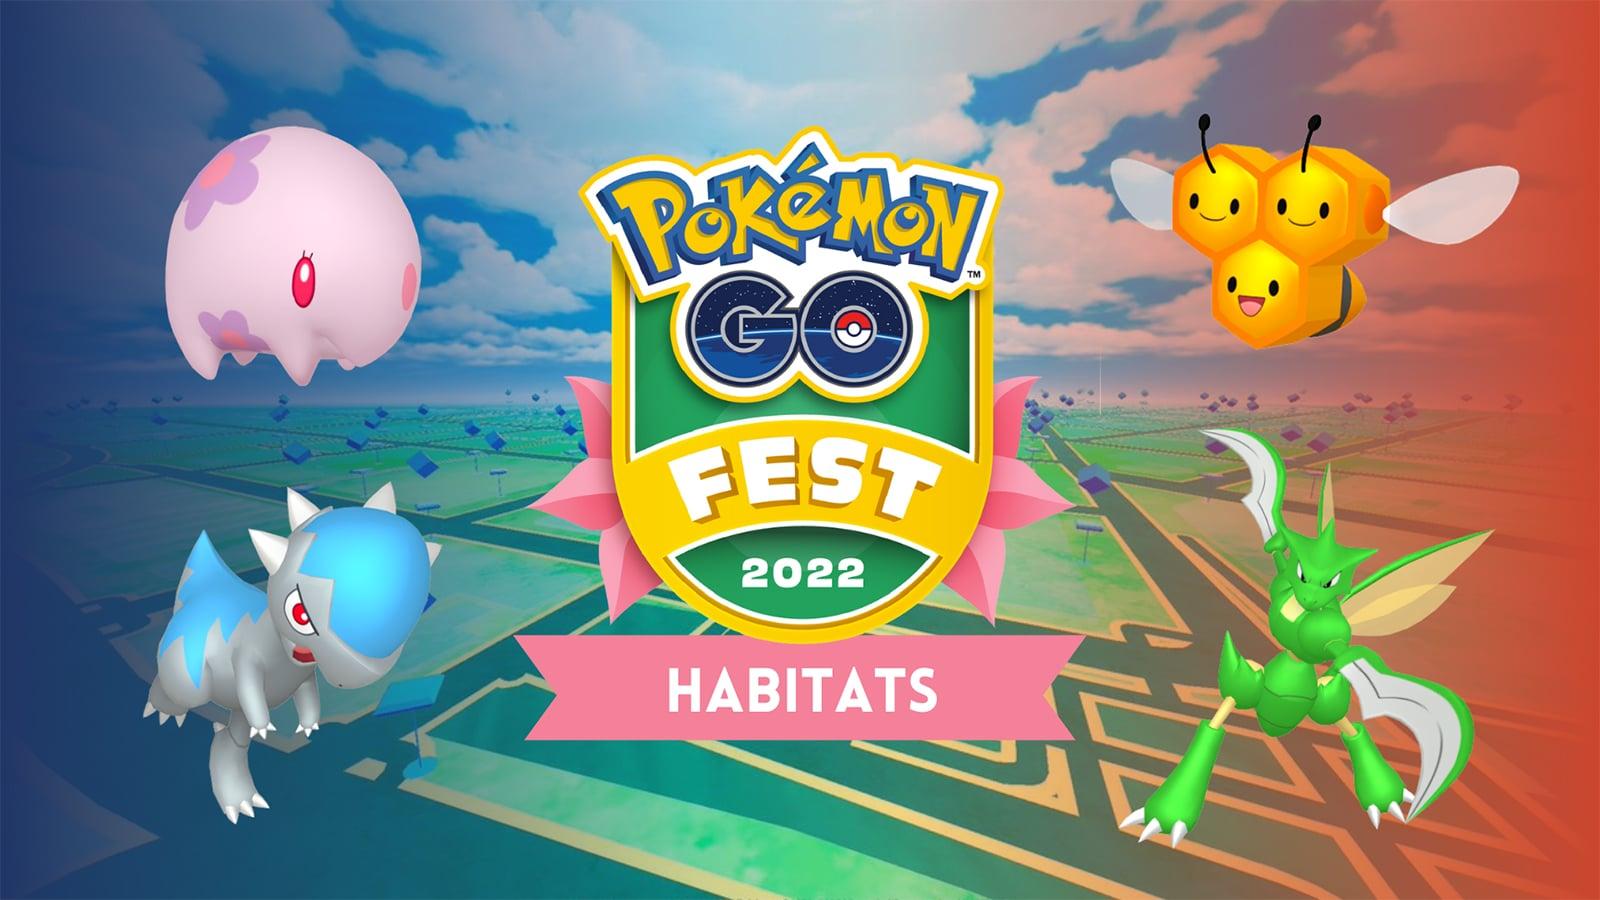 Pokémon Go Fest 2022 dates and locations announced - Polygon